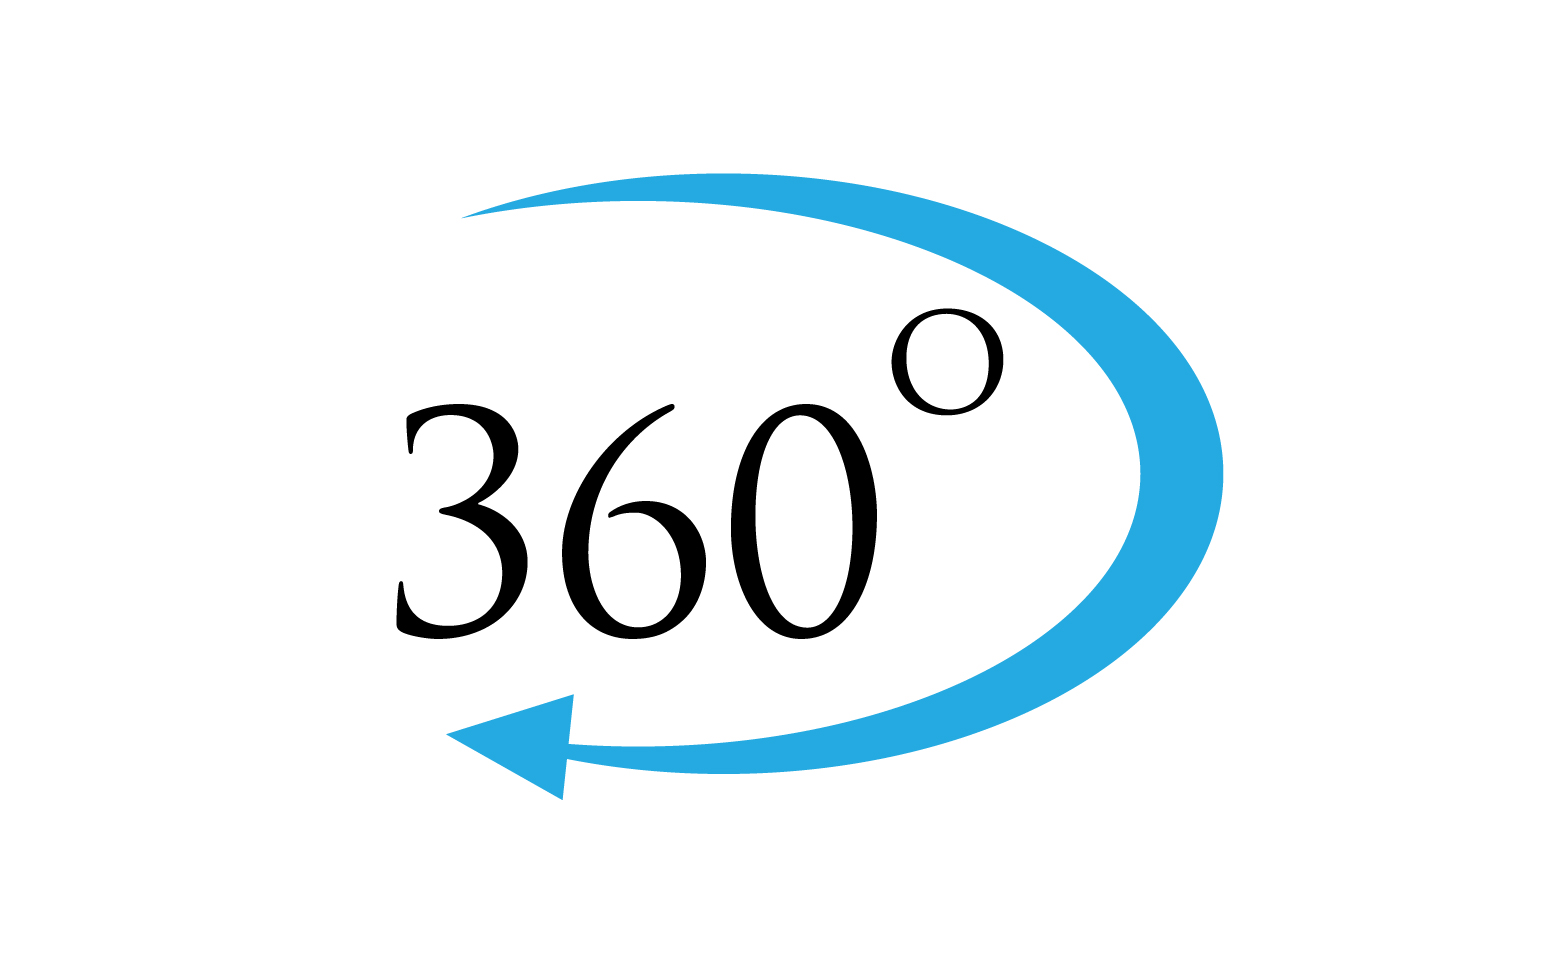 360 degree angle rotation icon symbol logo version v9